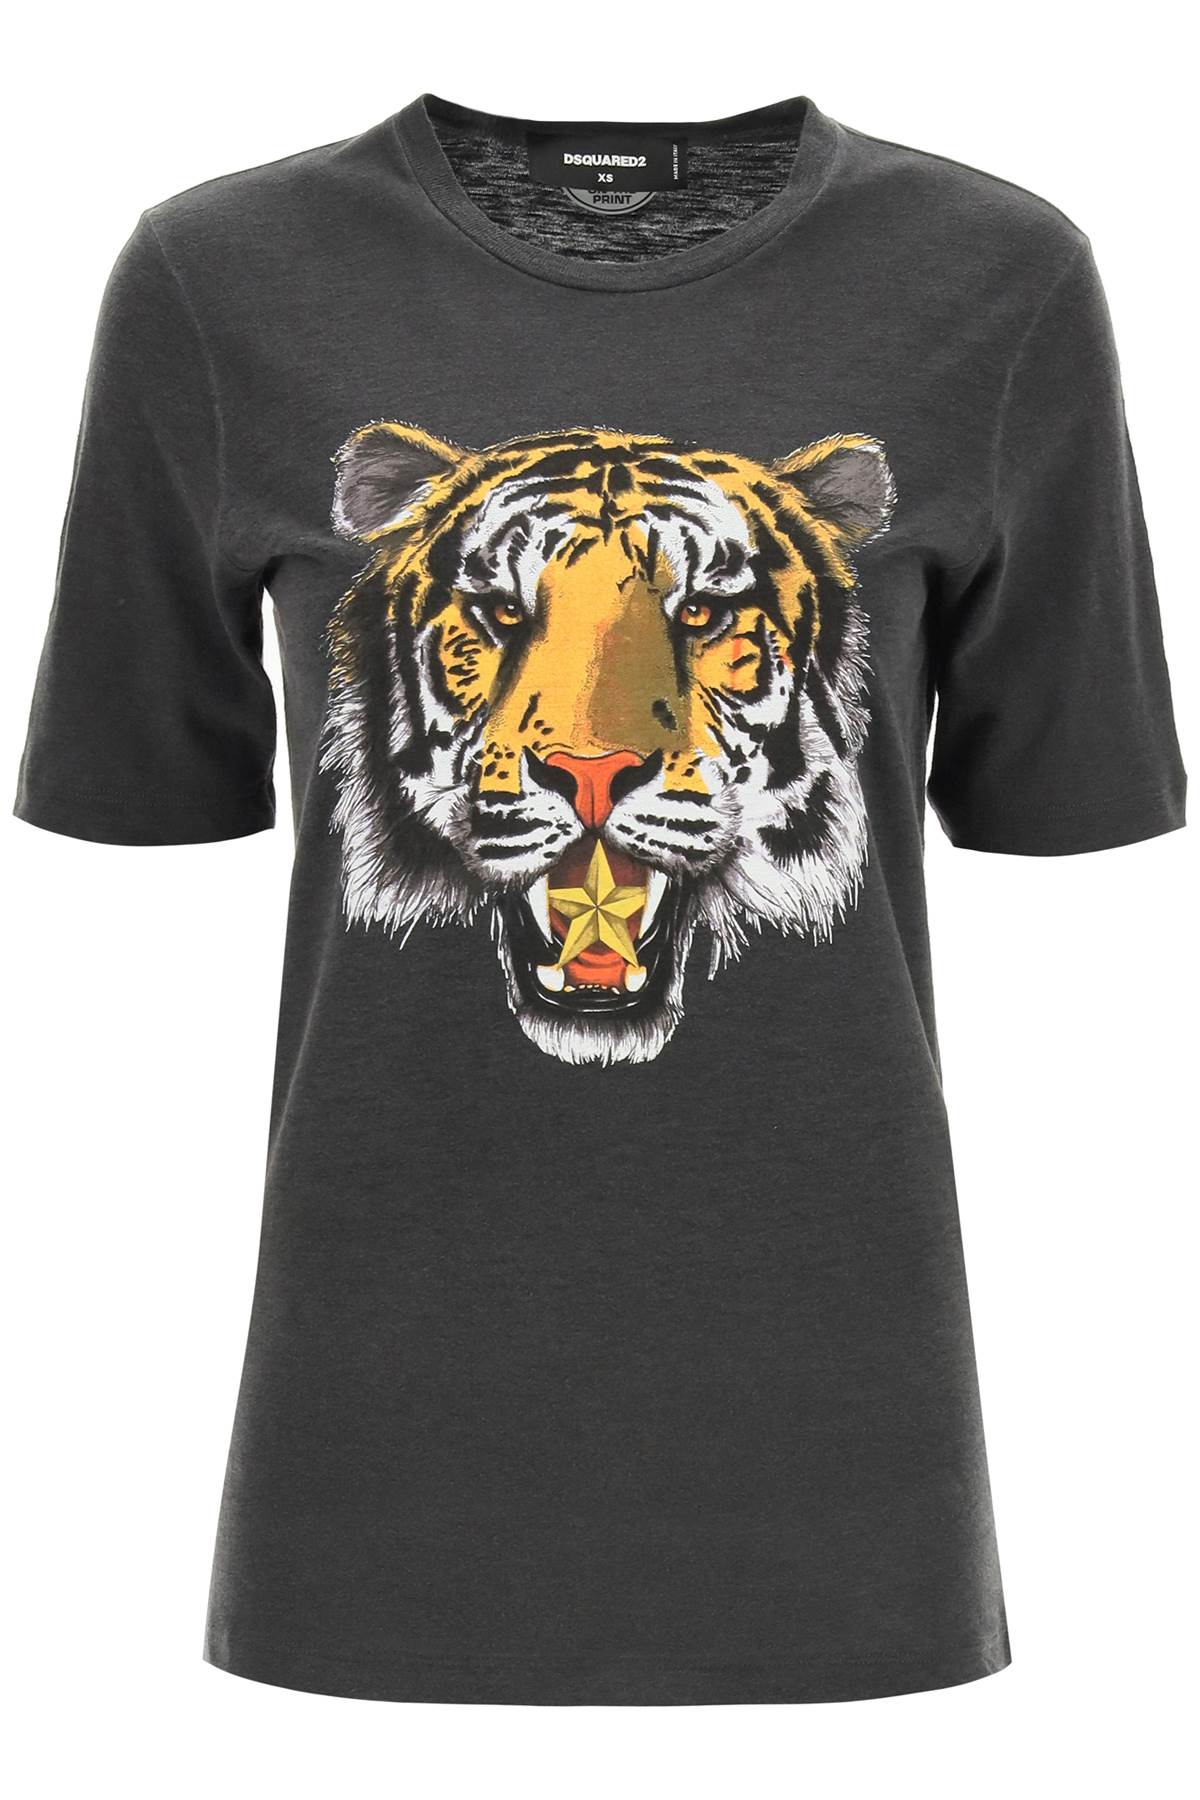 Dsquared2 Maxi Tiger Print T-shirt